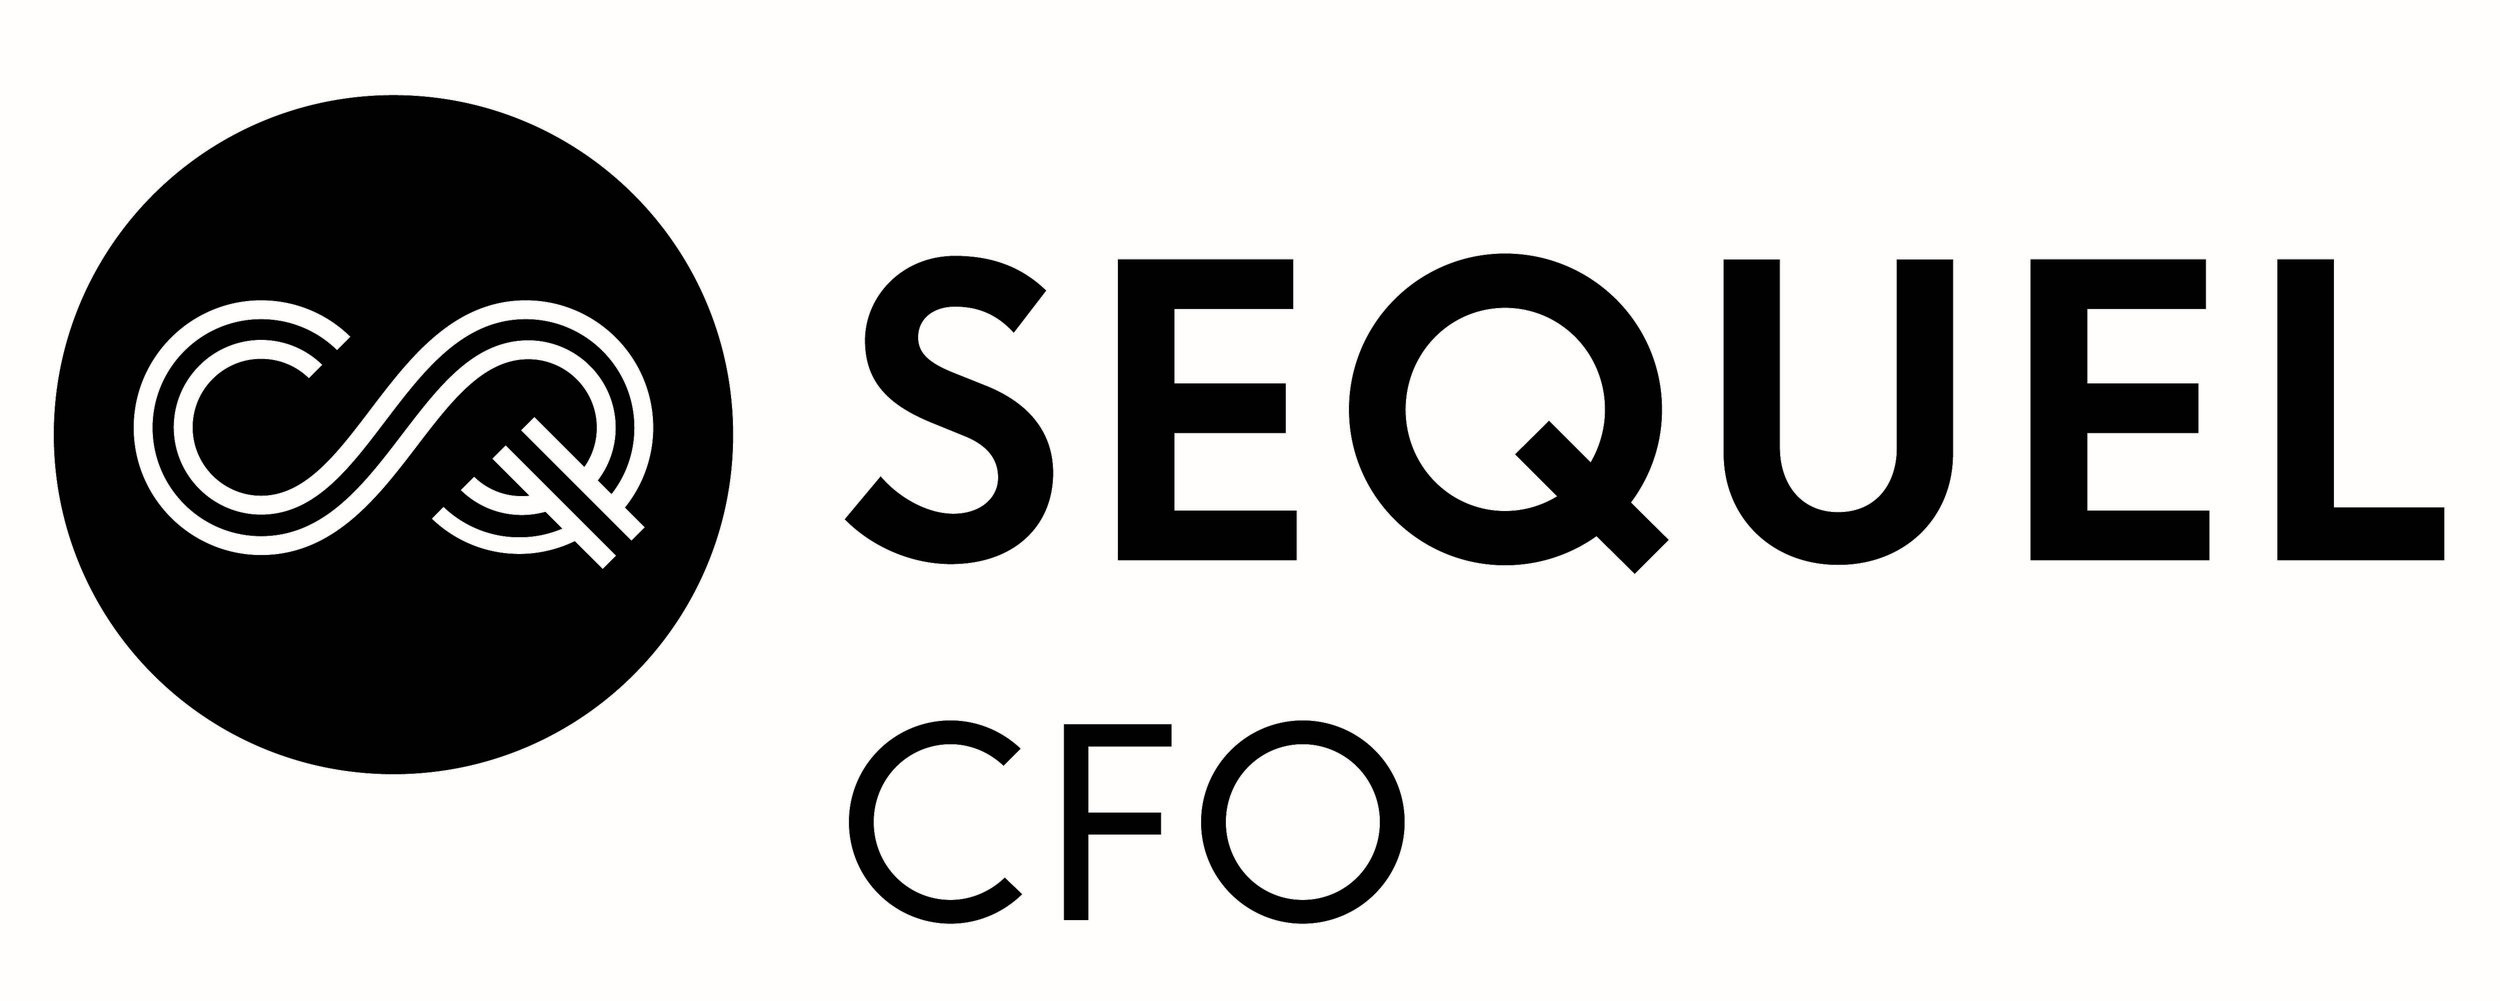 Sequel CFO logo - cropped.jpg